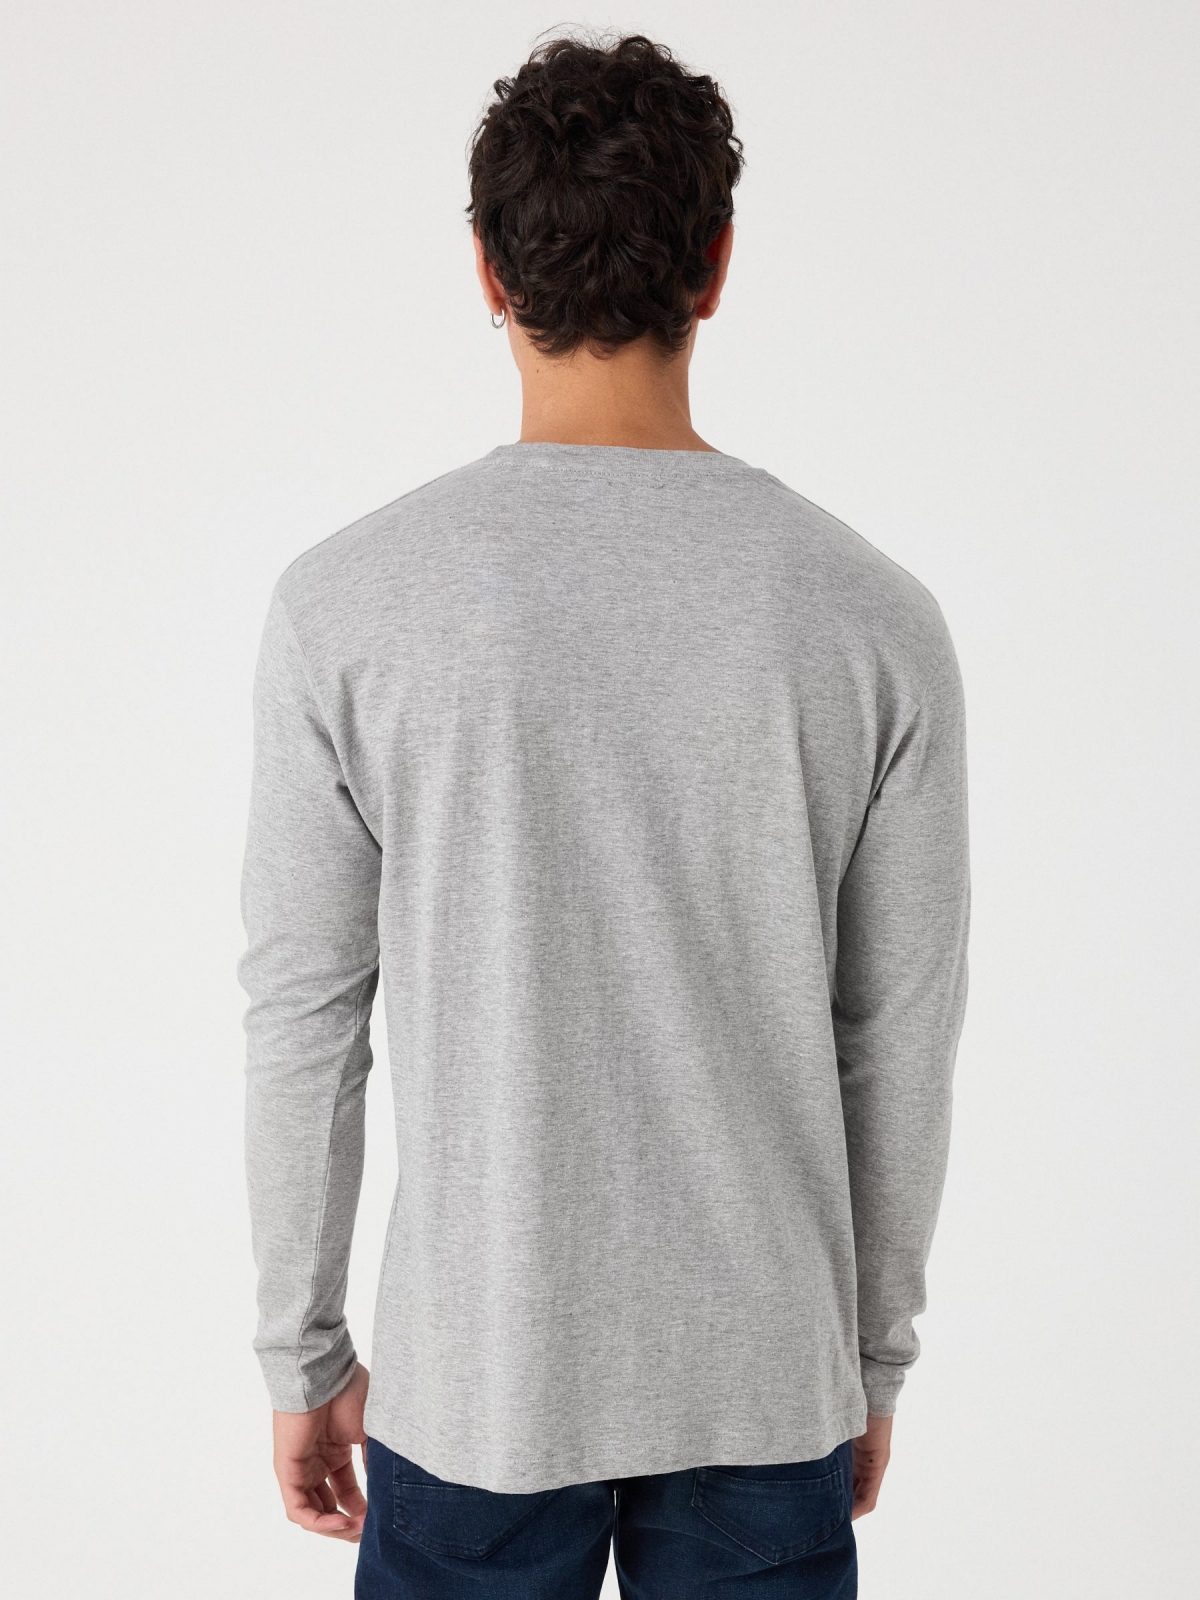 University print t-shirt grey middle back view